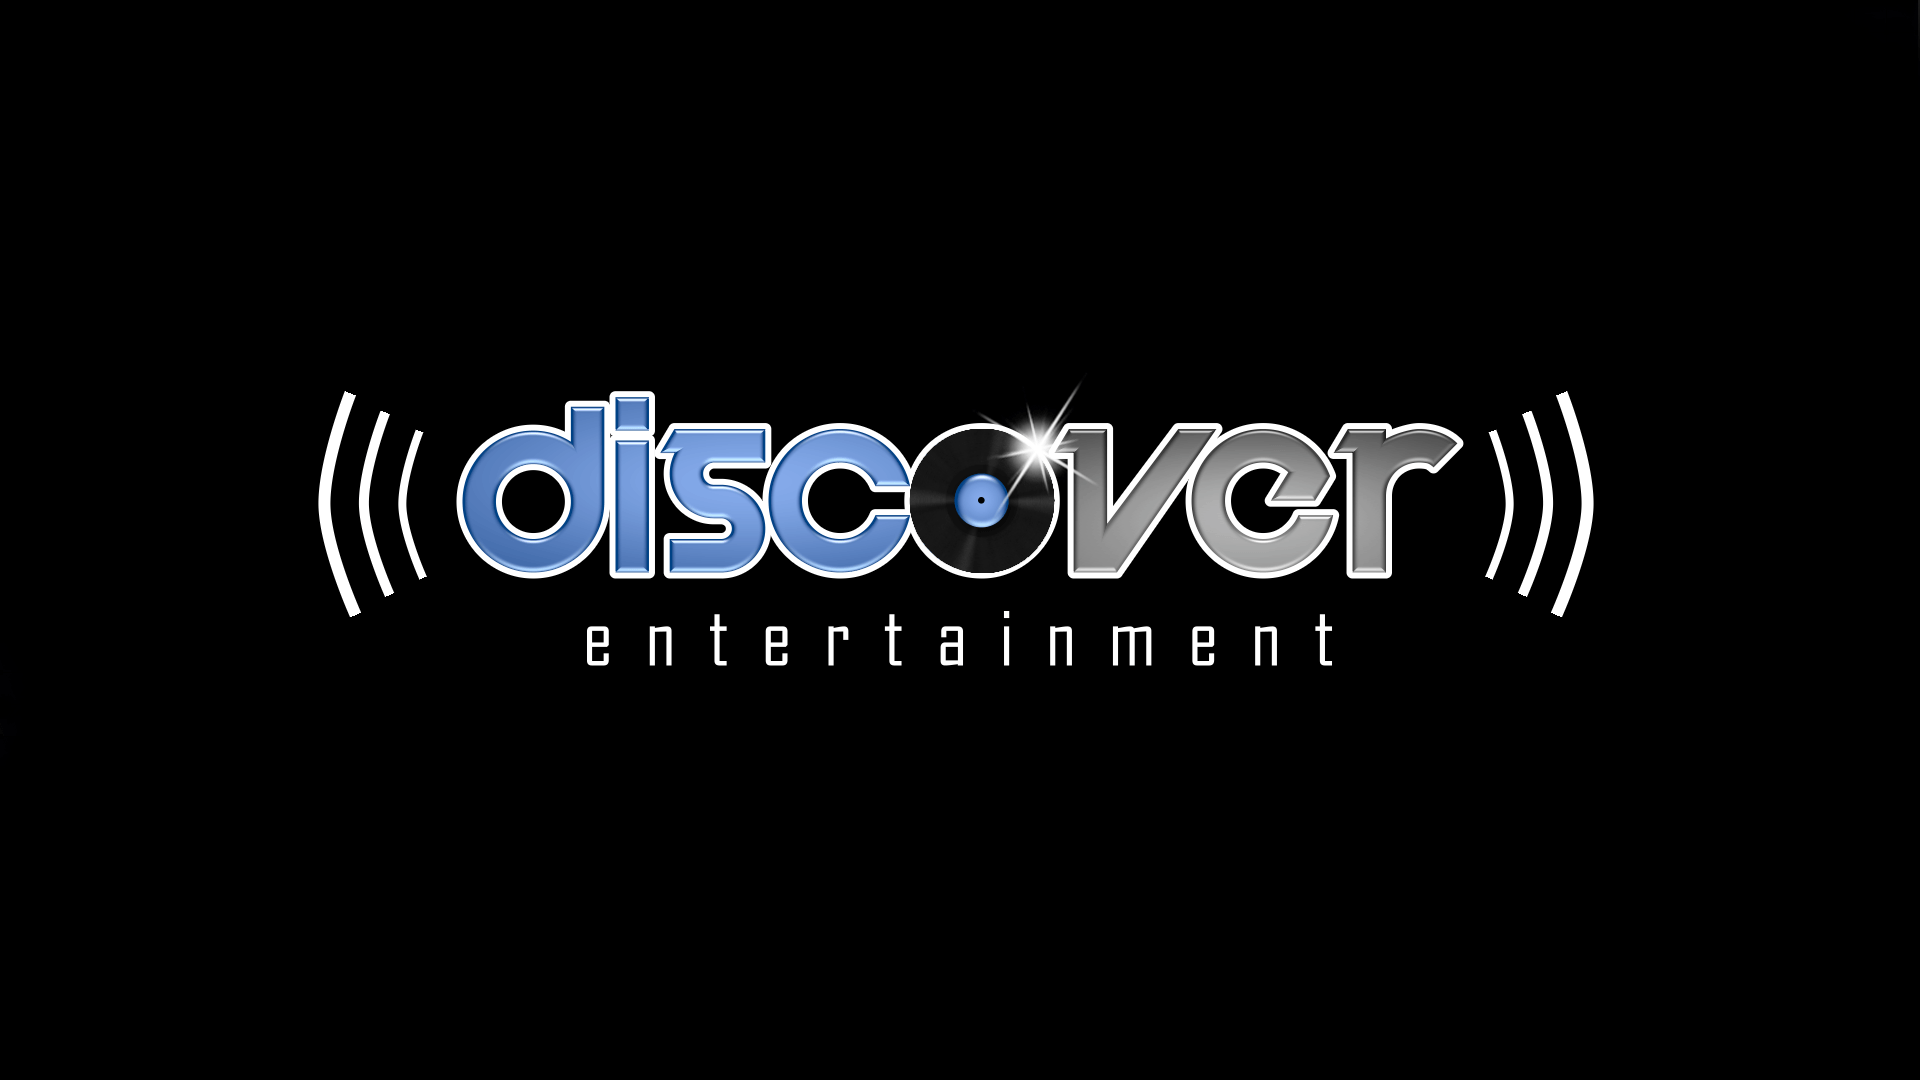 Car Entertainment Logo - Discover Entertainment Logo.png